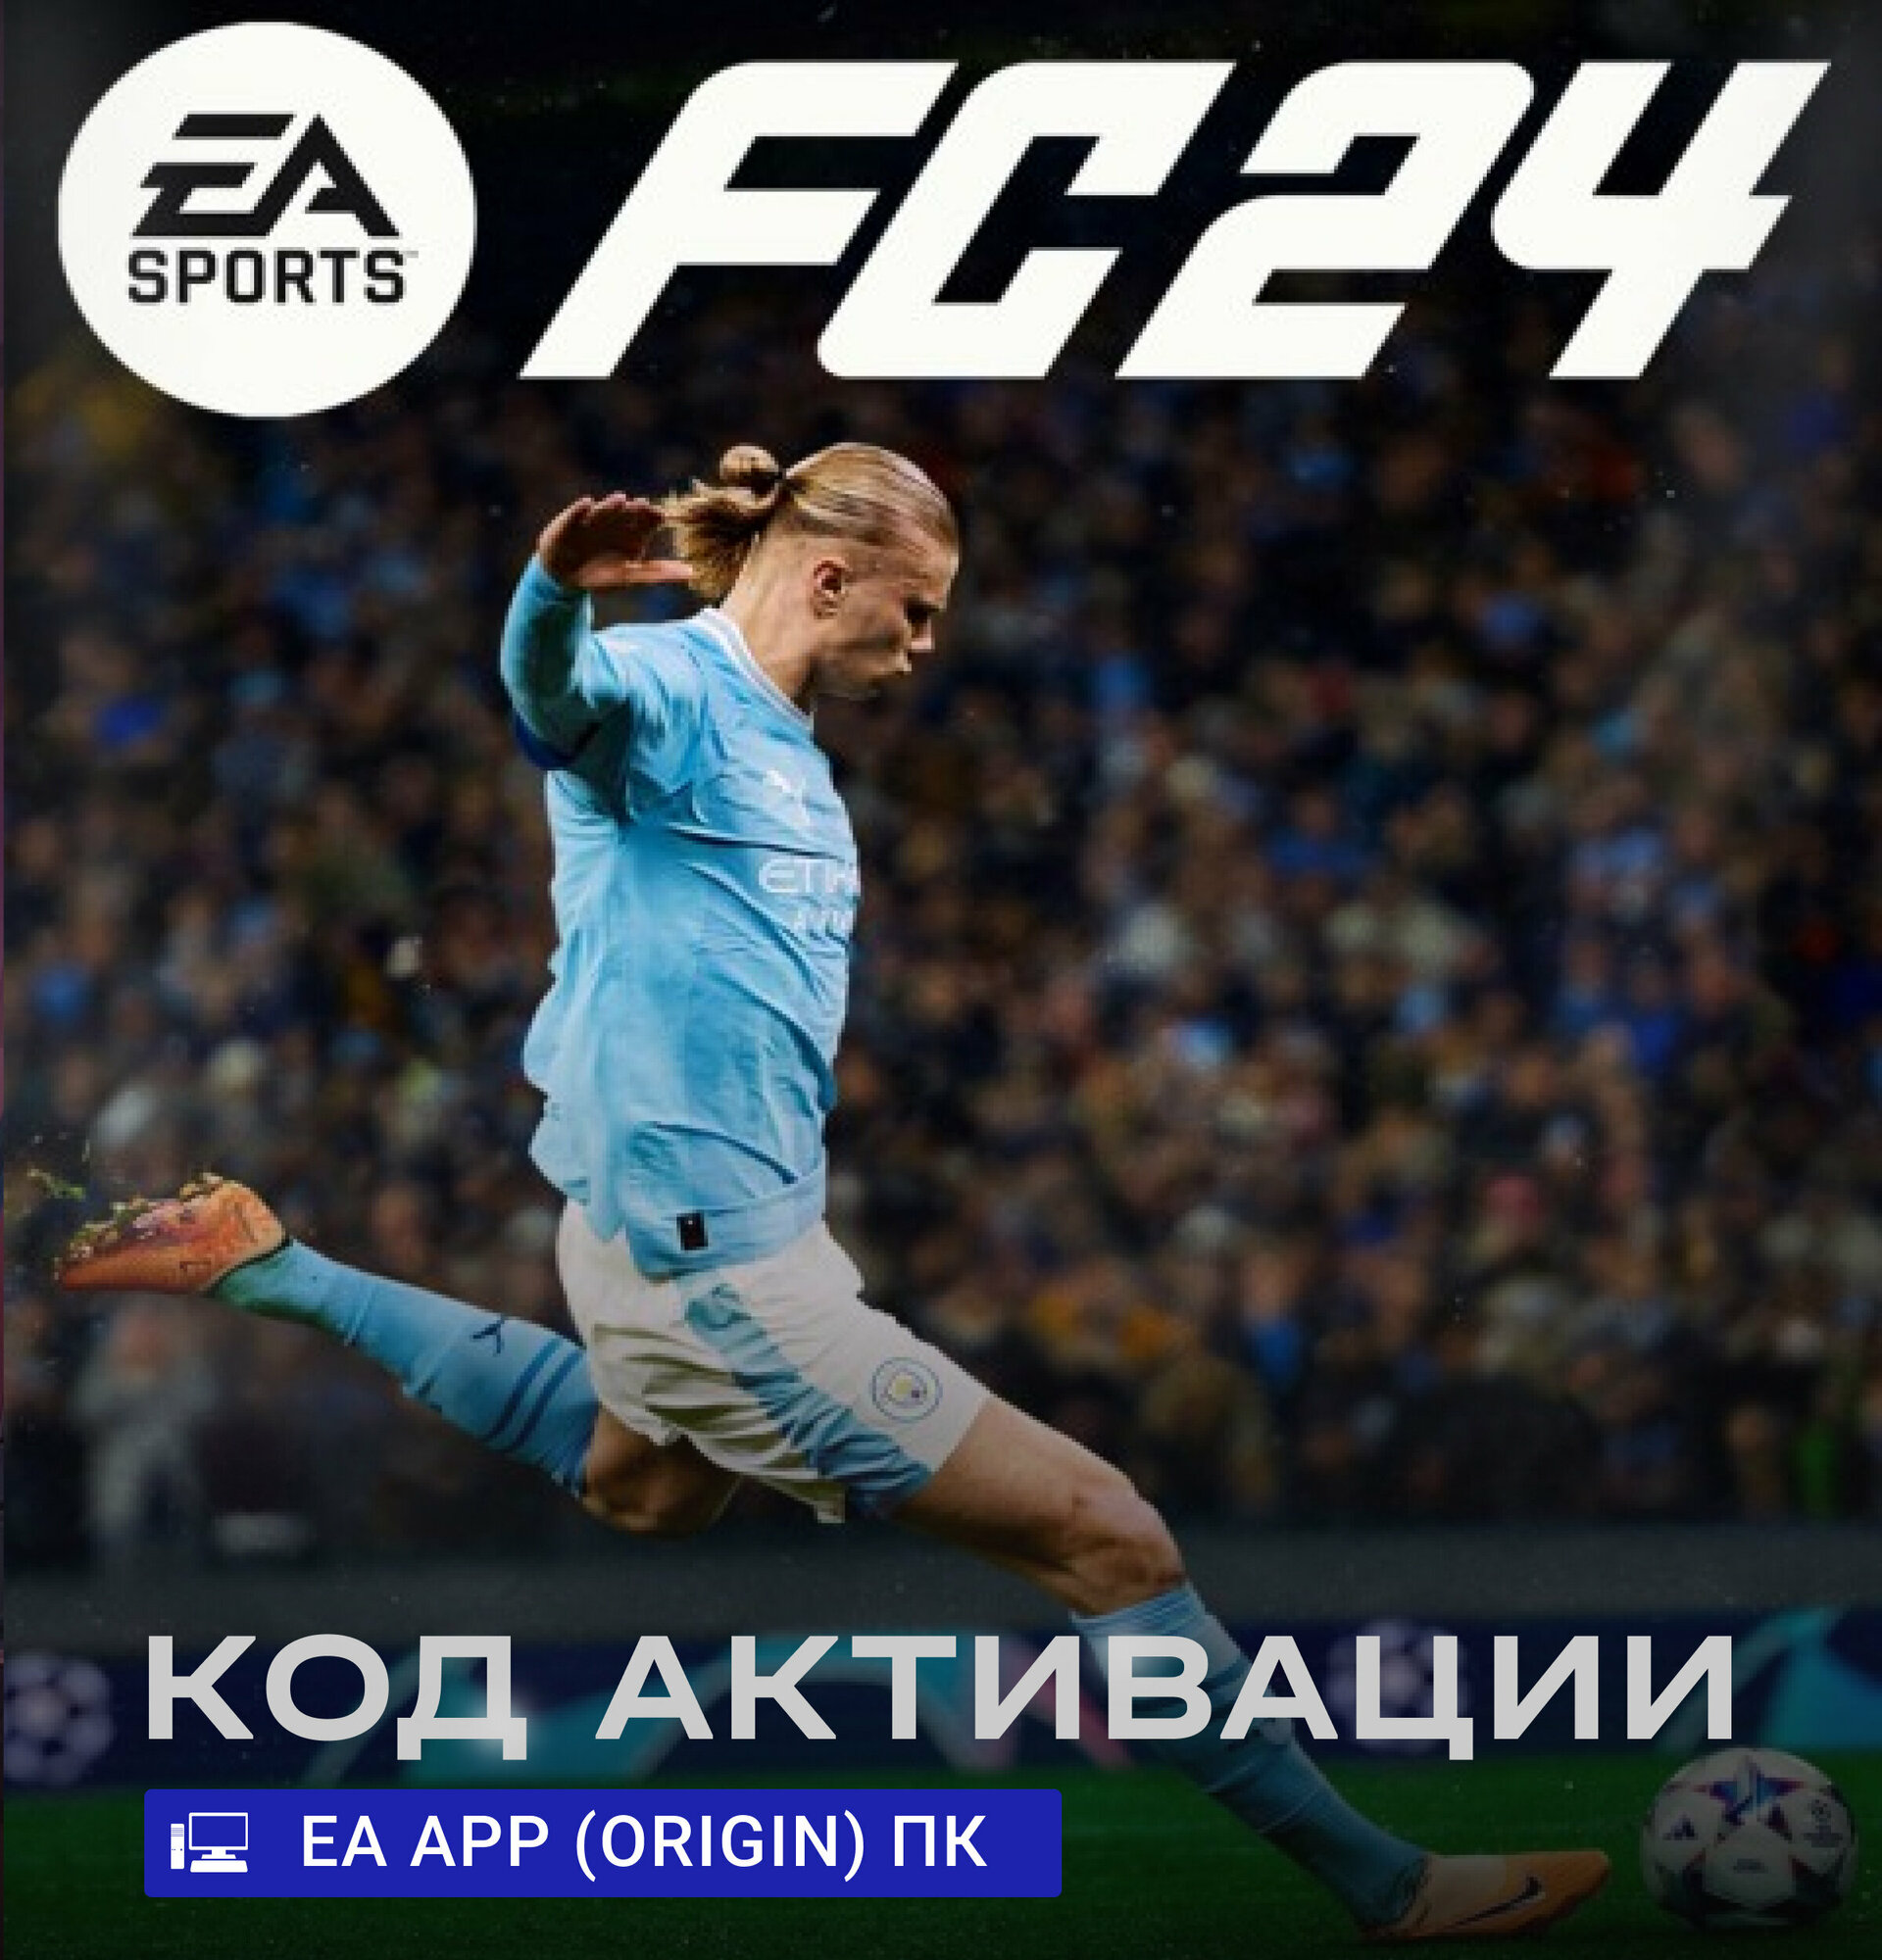 Игра EA SPORTS FC 24 (Fifa 24) Standard Edition для ПК (PC) EA app (Origin), русский интерфейс, электронный ключ